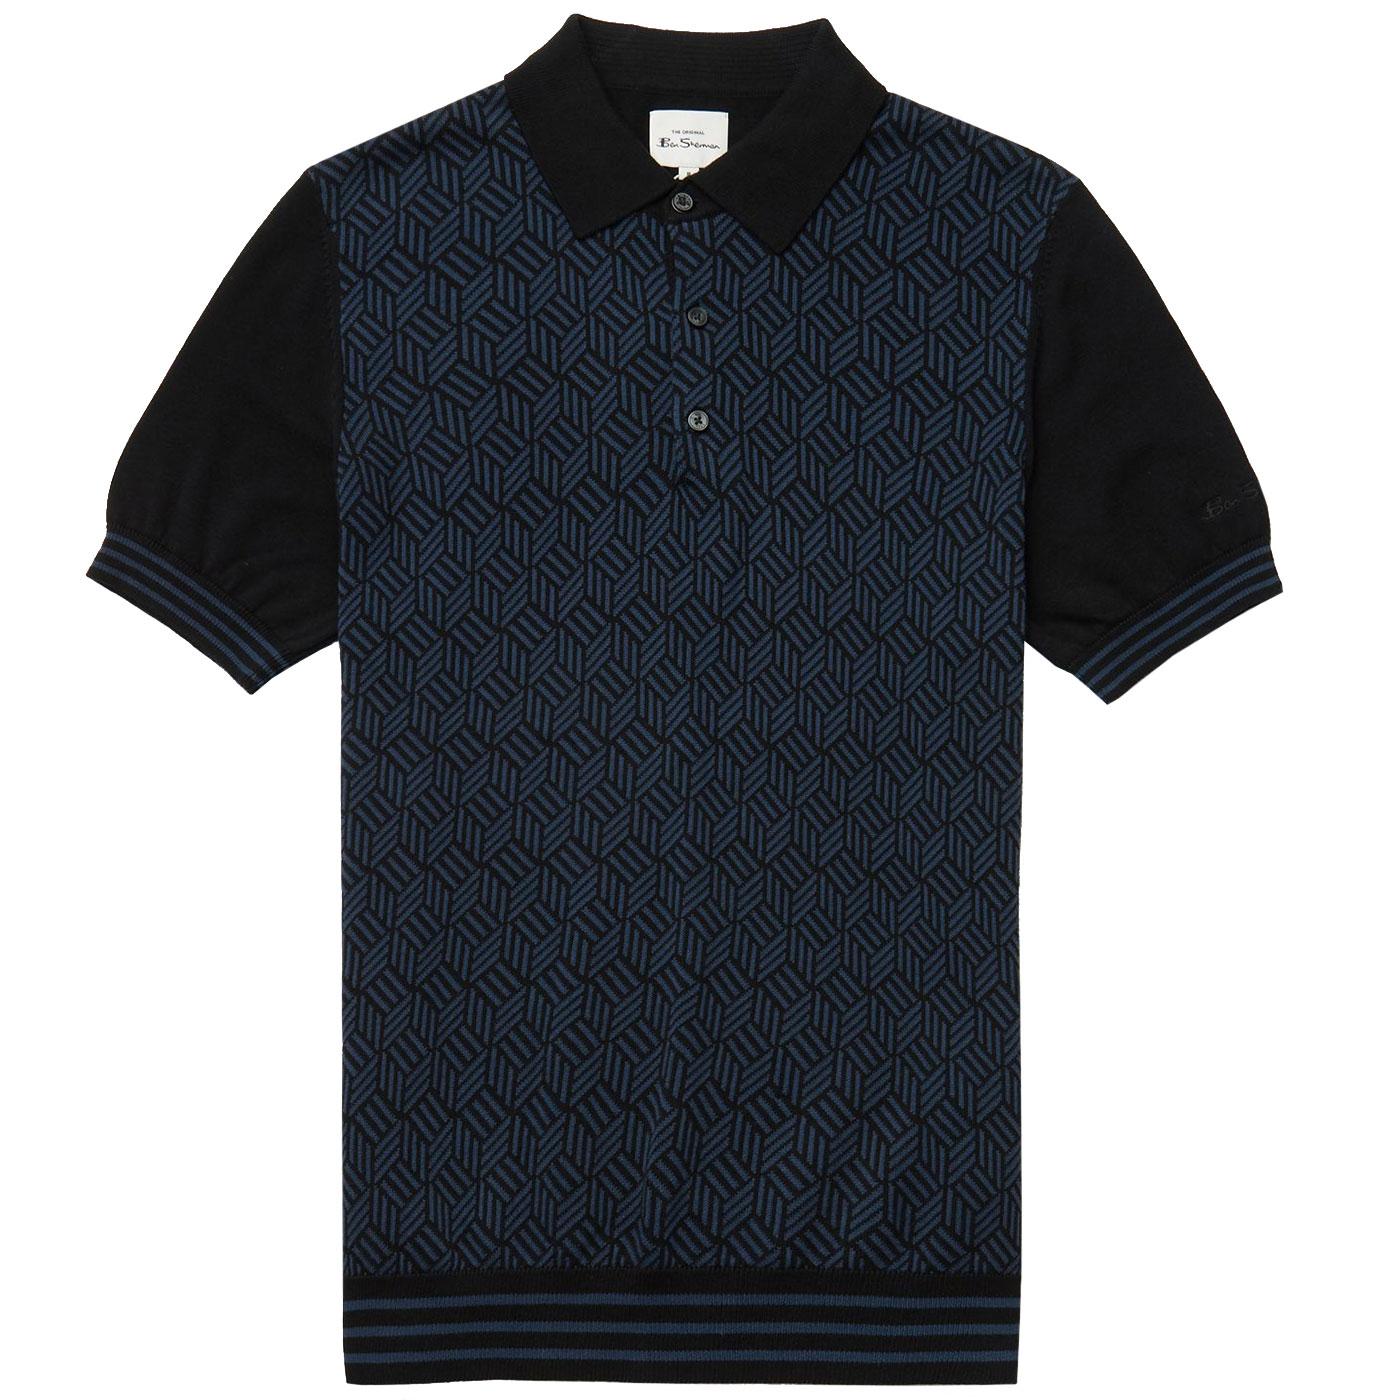 BEN SHERMAN Retro Mod Knitted Jacquard Polo BLACK